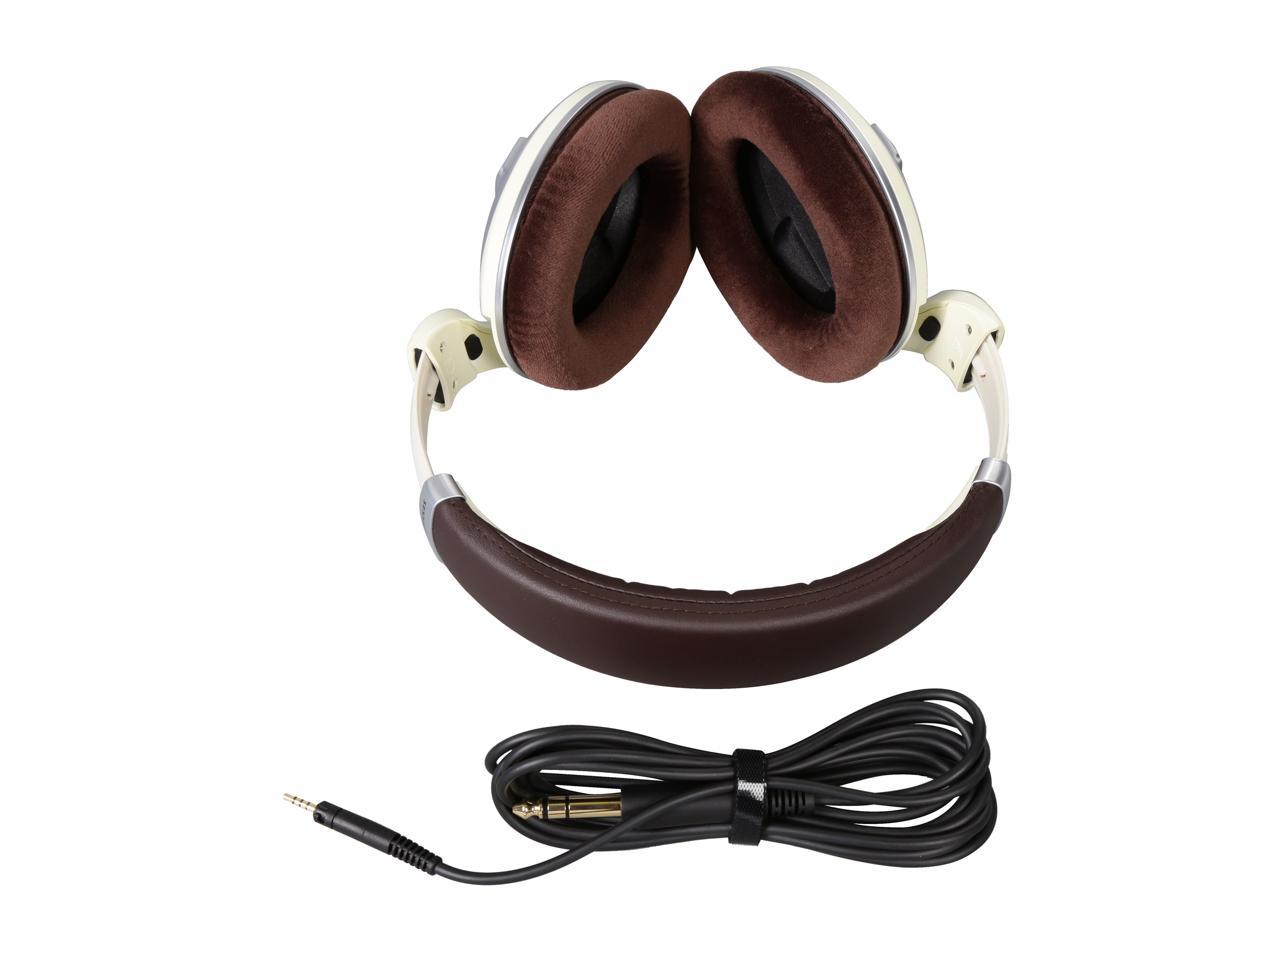 Sennheiser HD 599 Around-Ear Headphones - Ivory